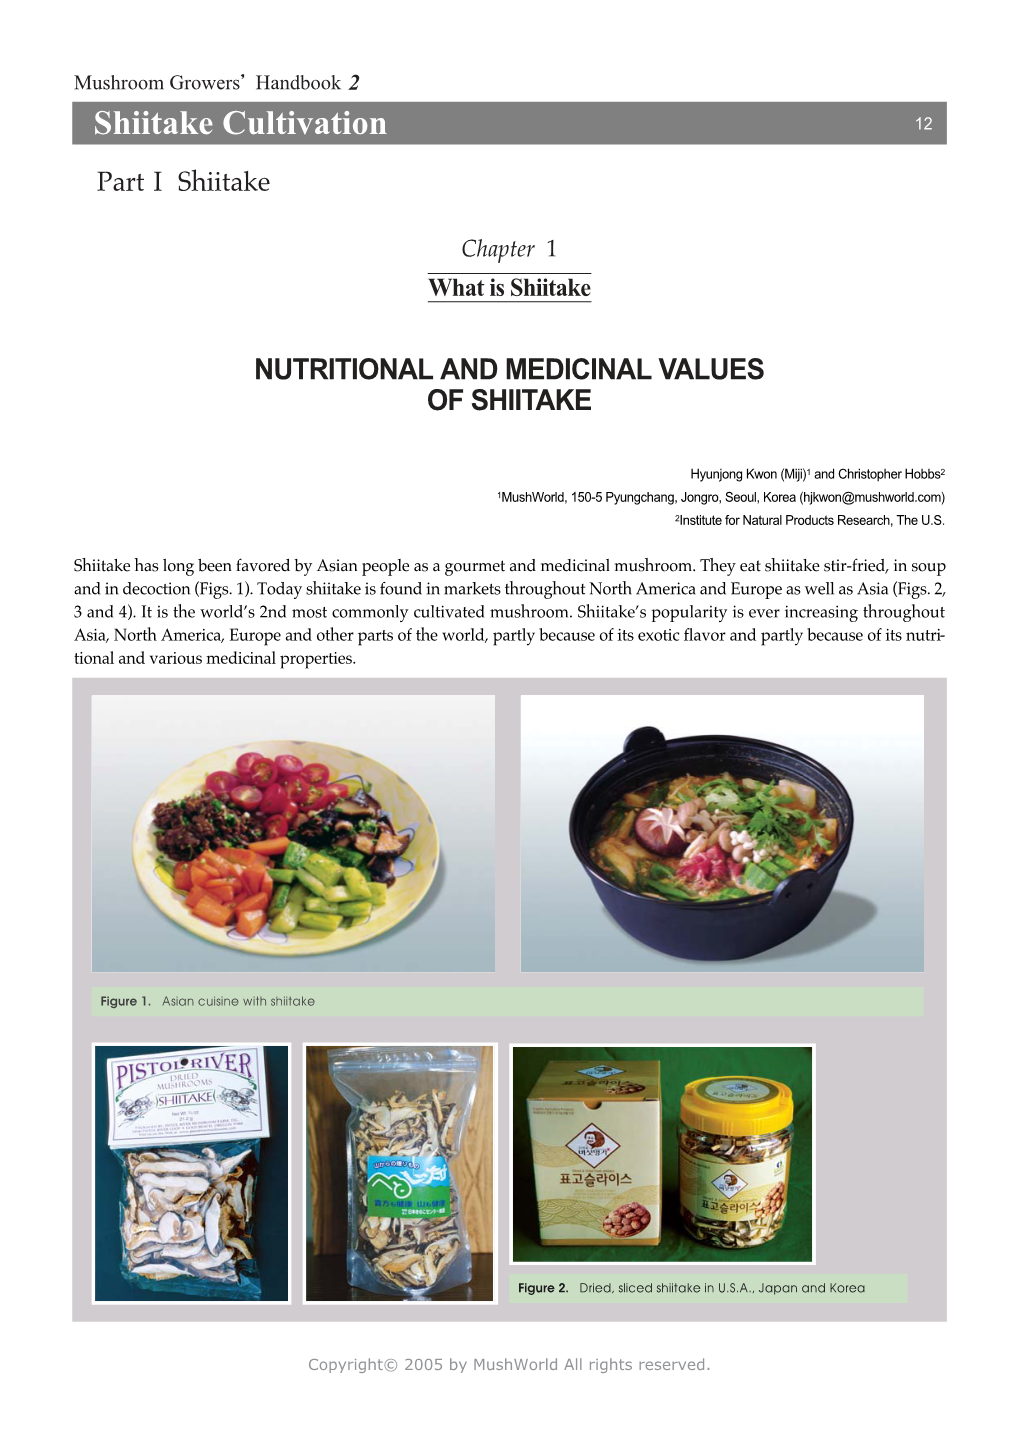 Nutritional and Medicinal Values of Shiitake